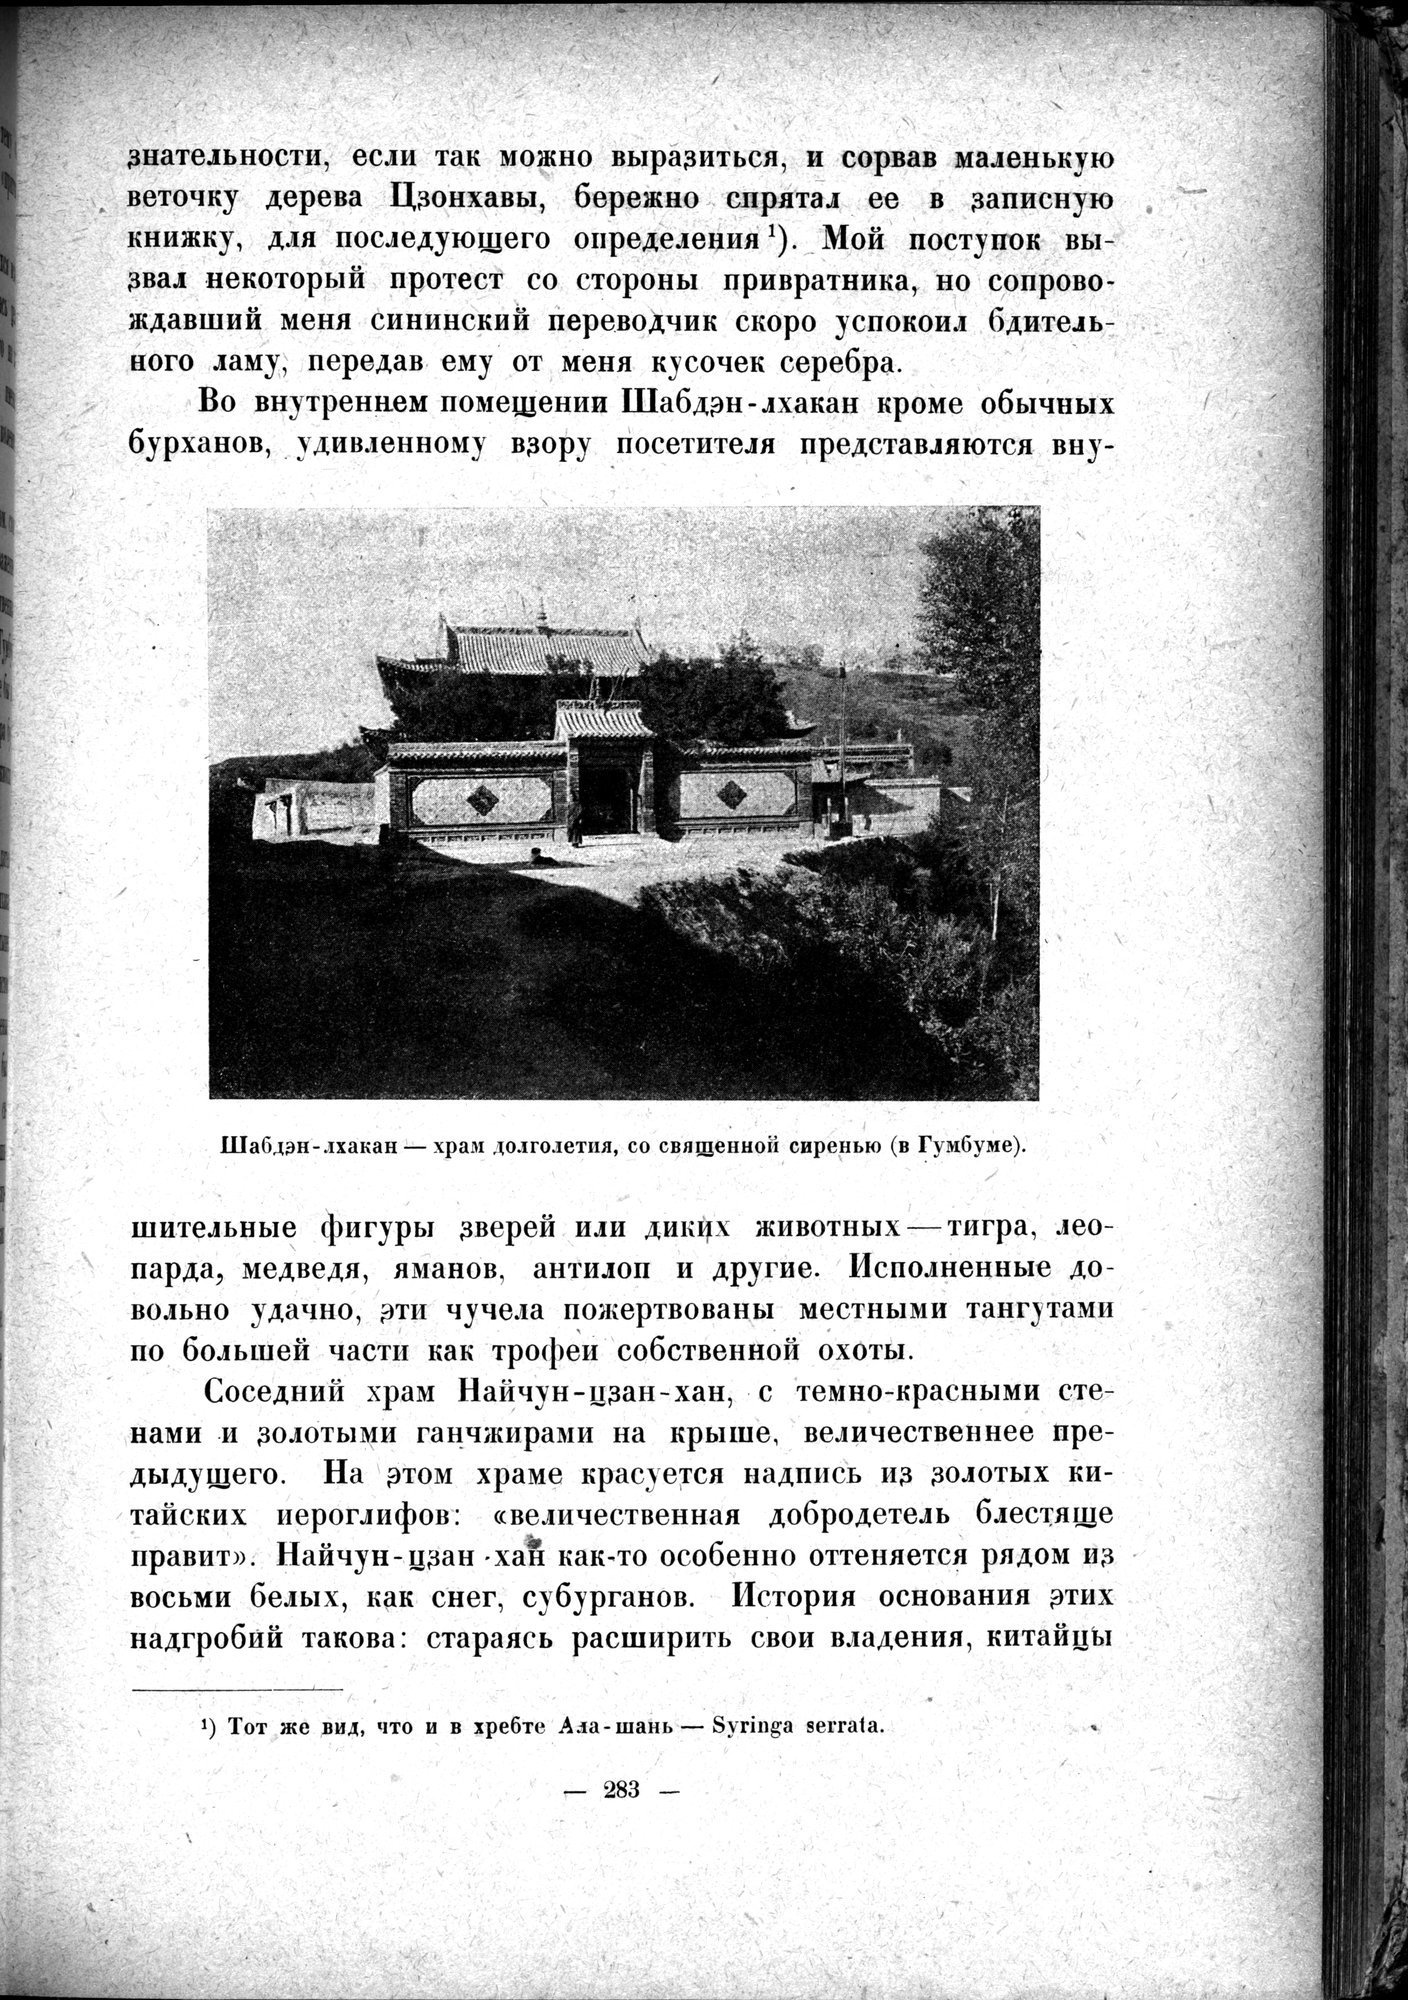 Mongoliya i Amdo i mertby gorod Khara-Khoto : vol.1 / Page 333 (Grayscale High Resolution Image)